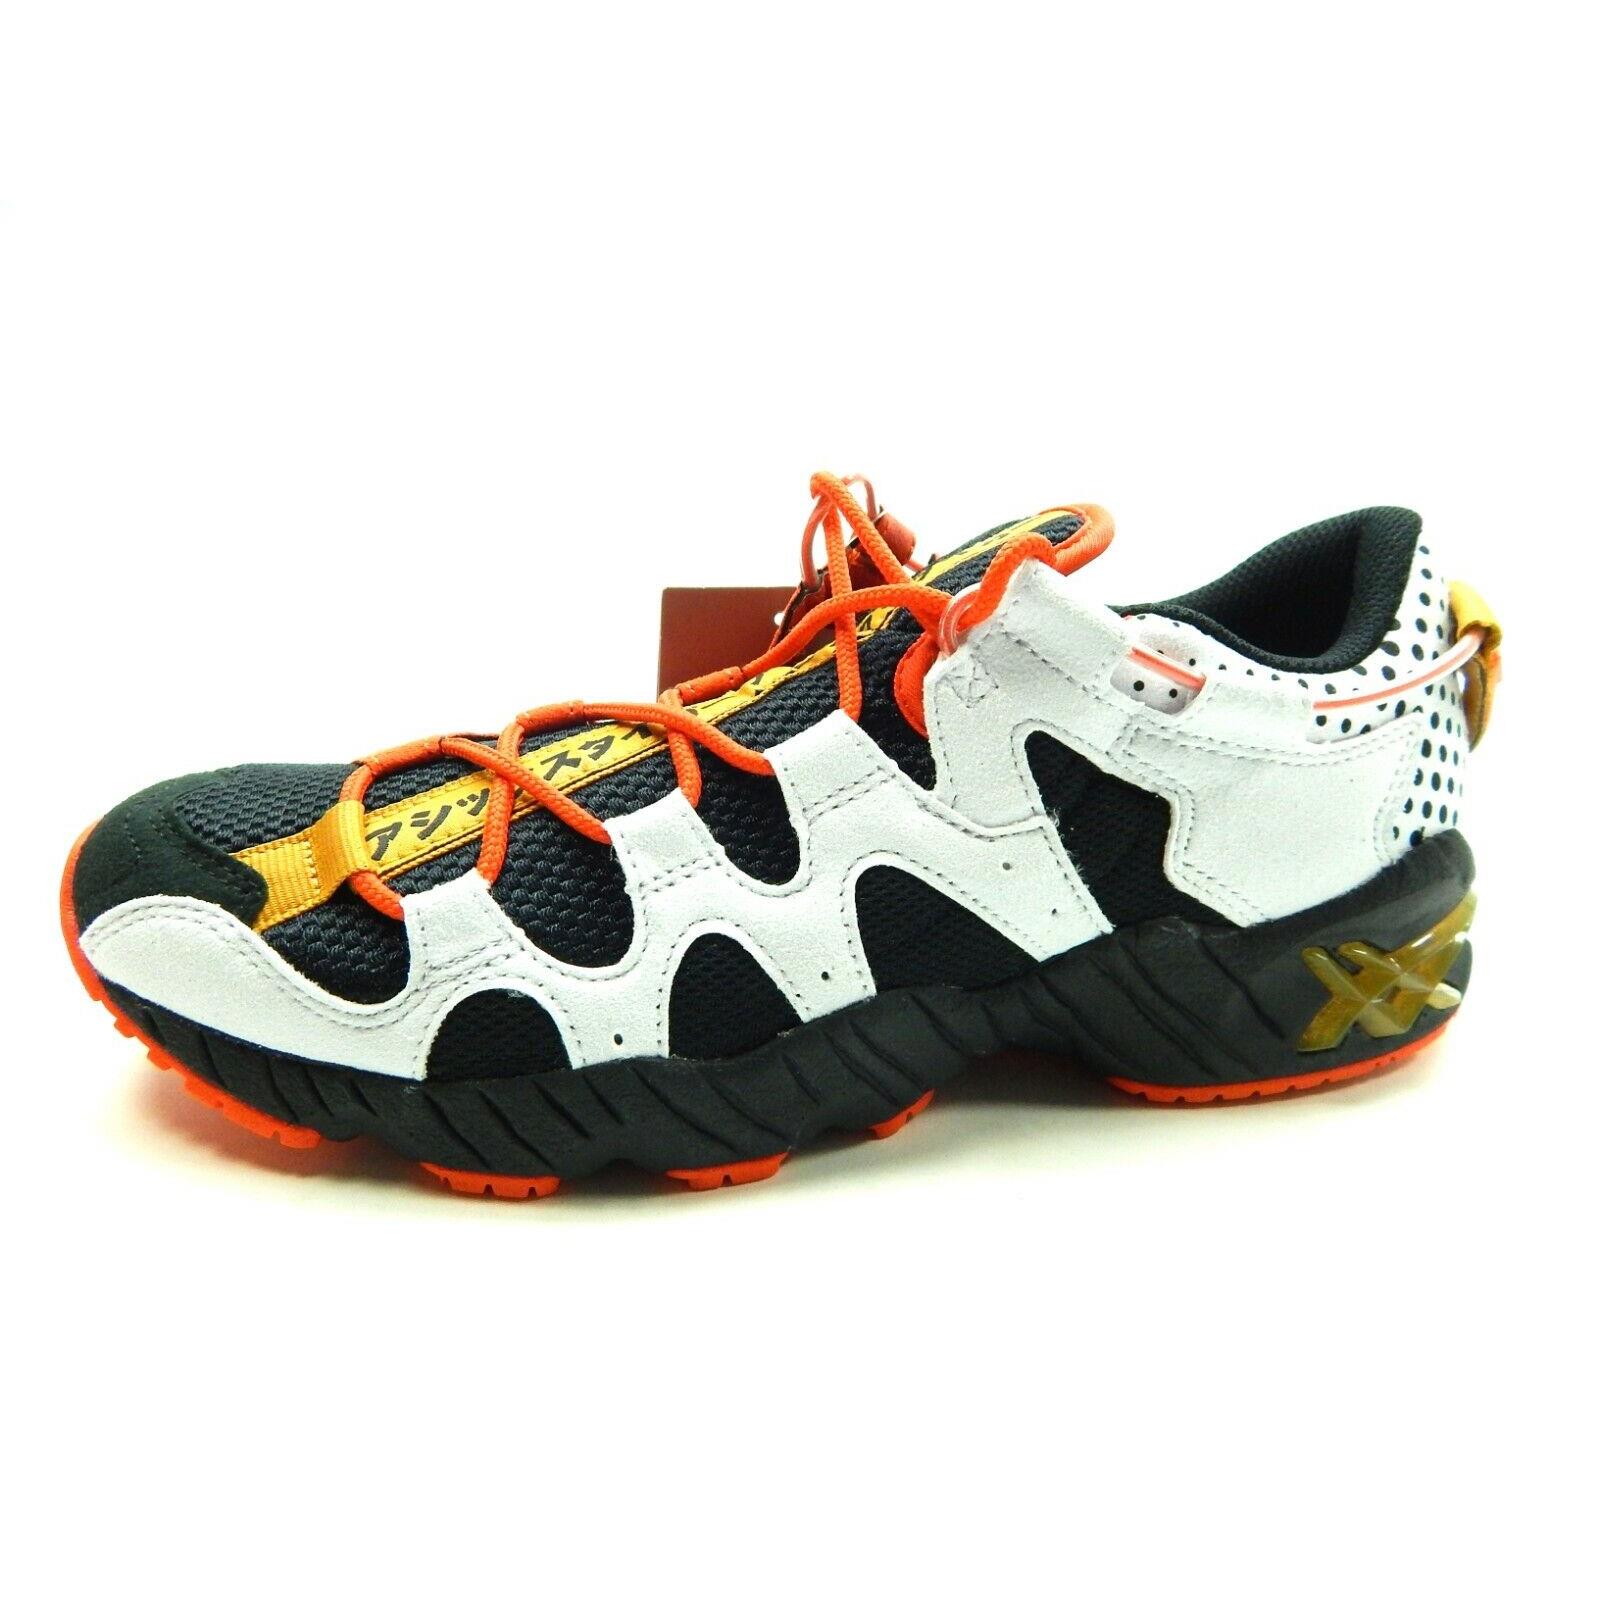 Asics Gel Mai Black White Athletic Men Shoes Size 8